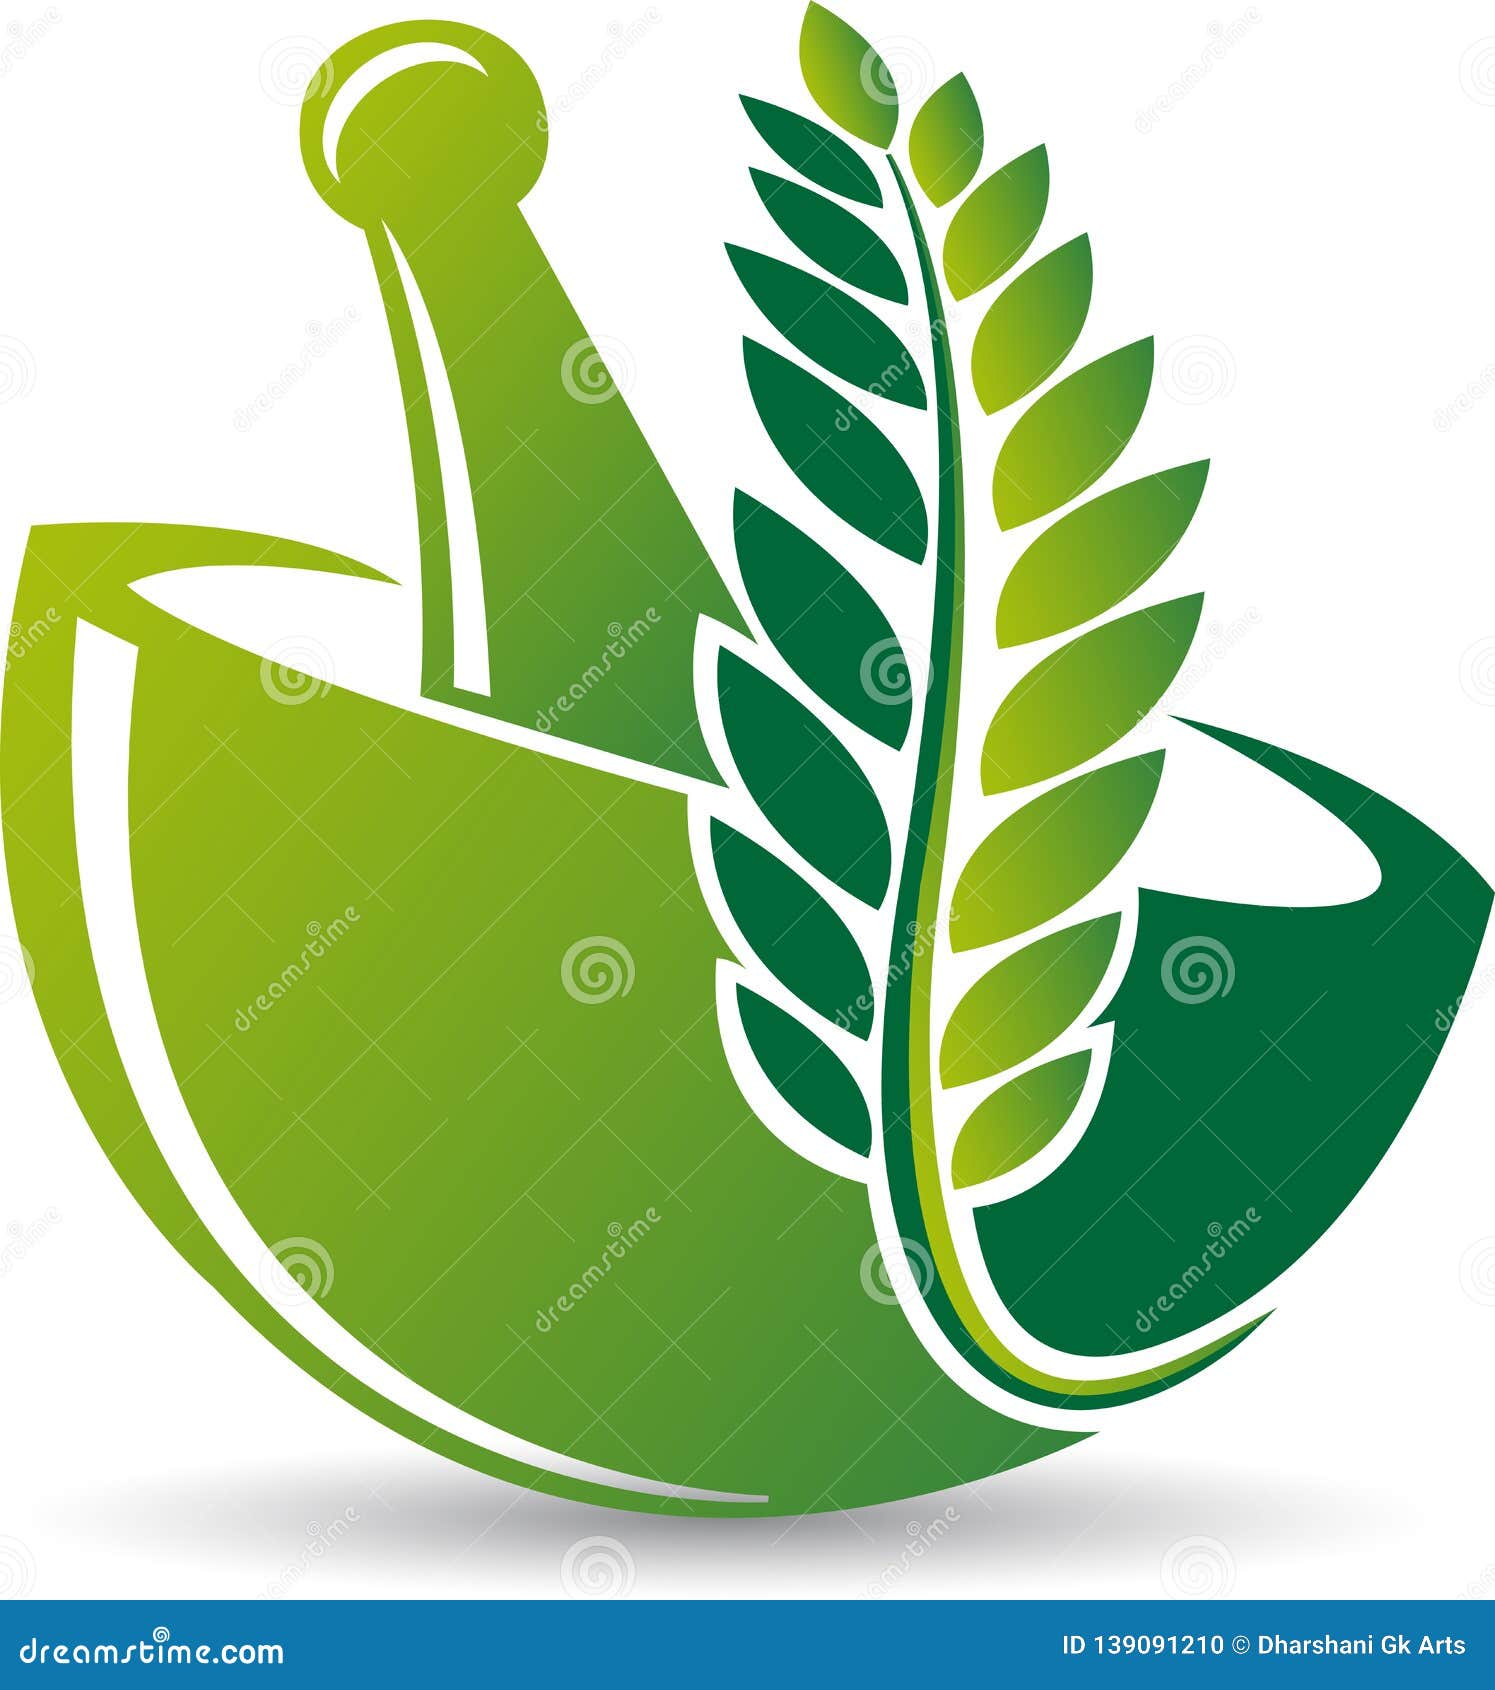 herbal medicine logo